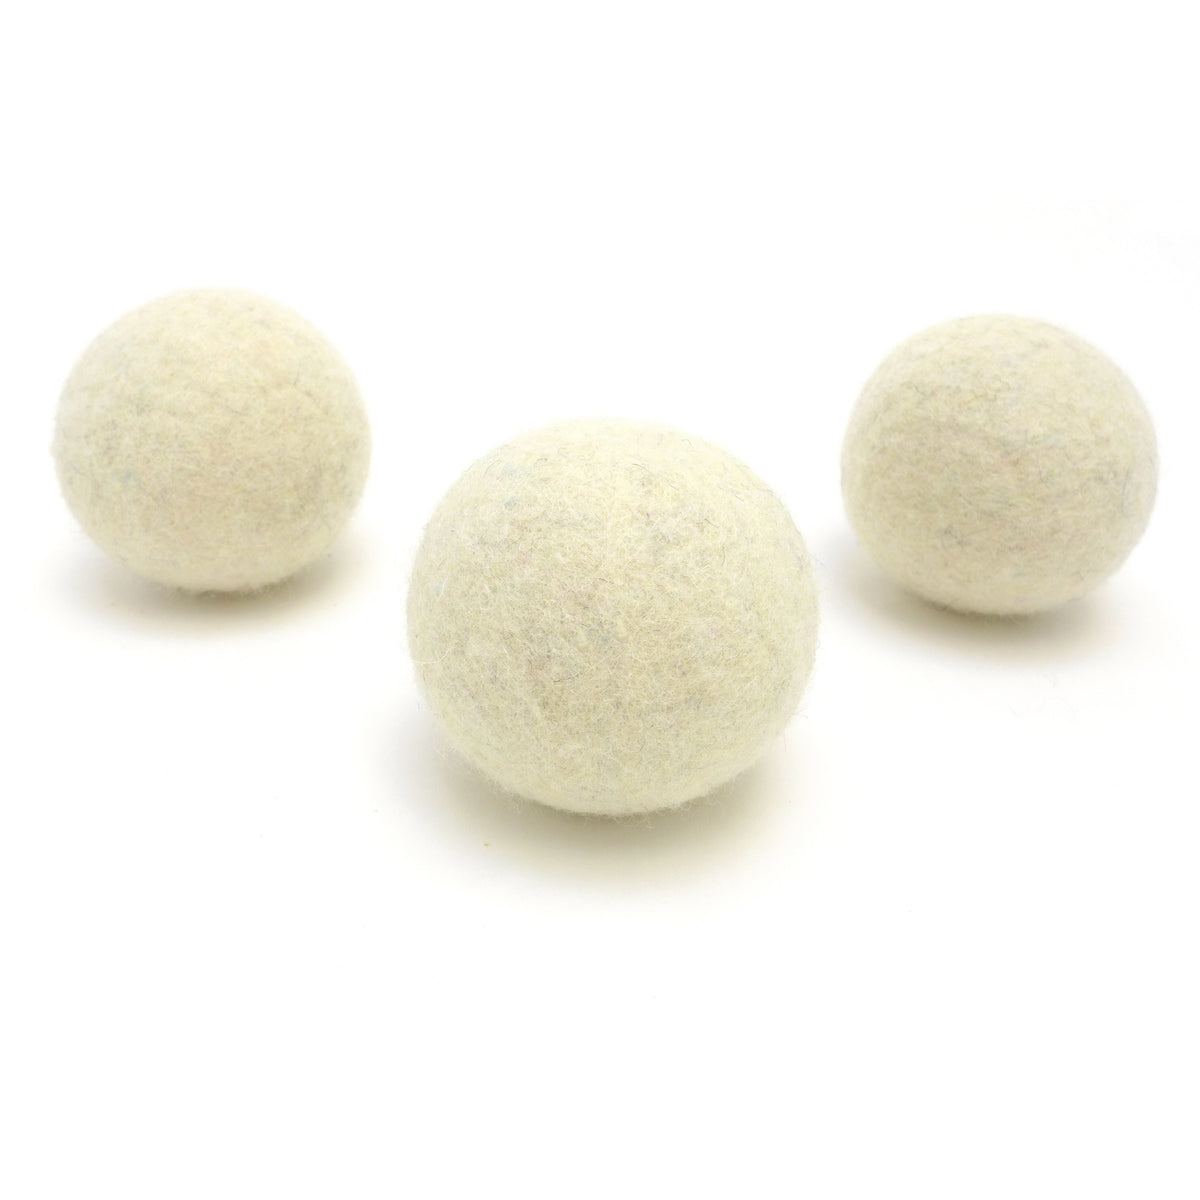 Wool Dryer Balls 3-Pack